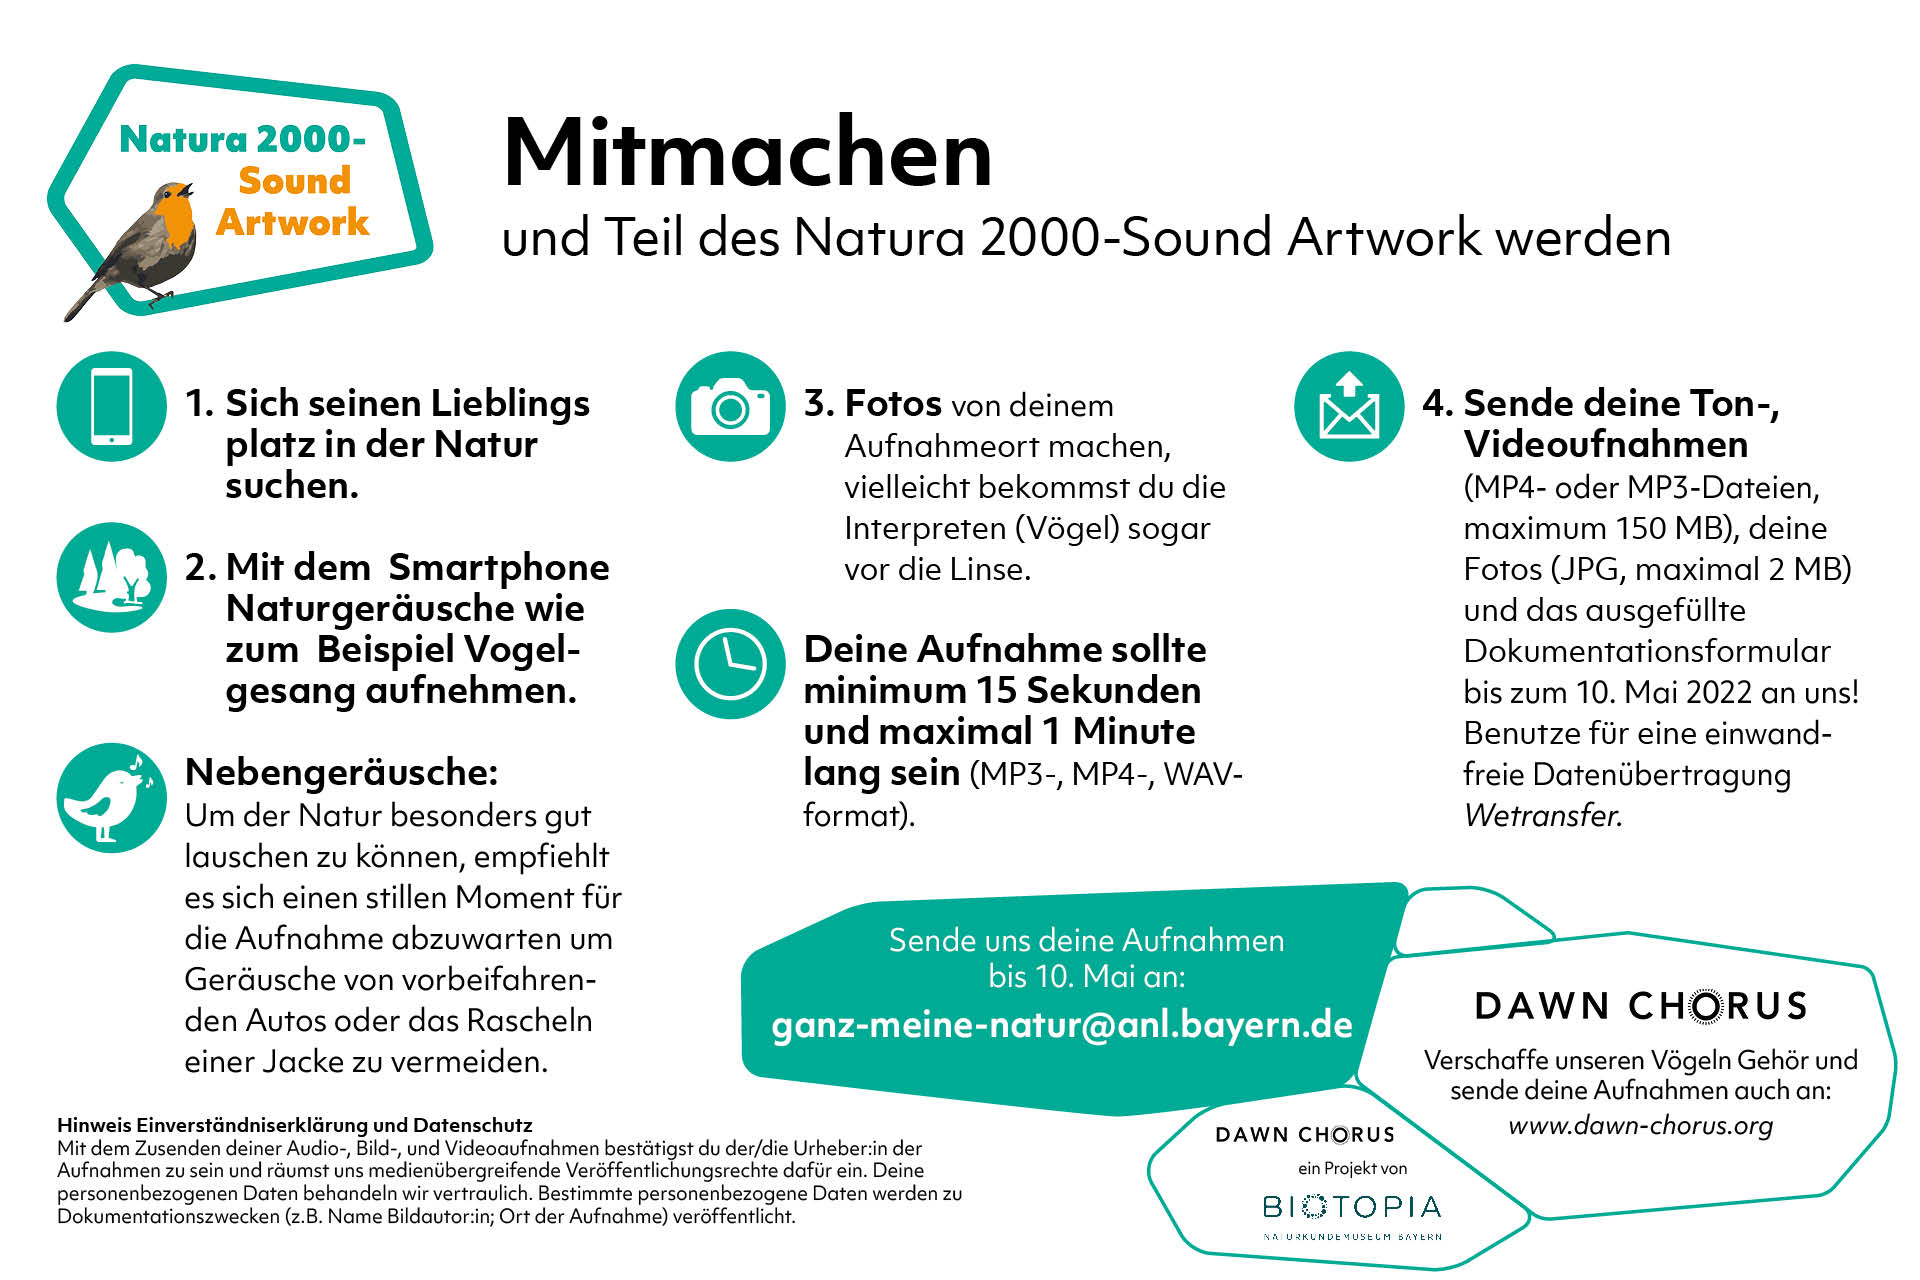 Anleitung zur Teilnahme am Natura 2000-Sound Artwork.